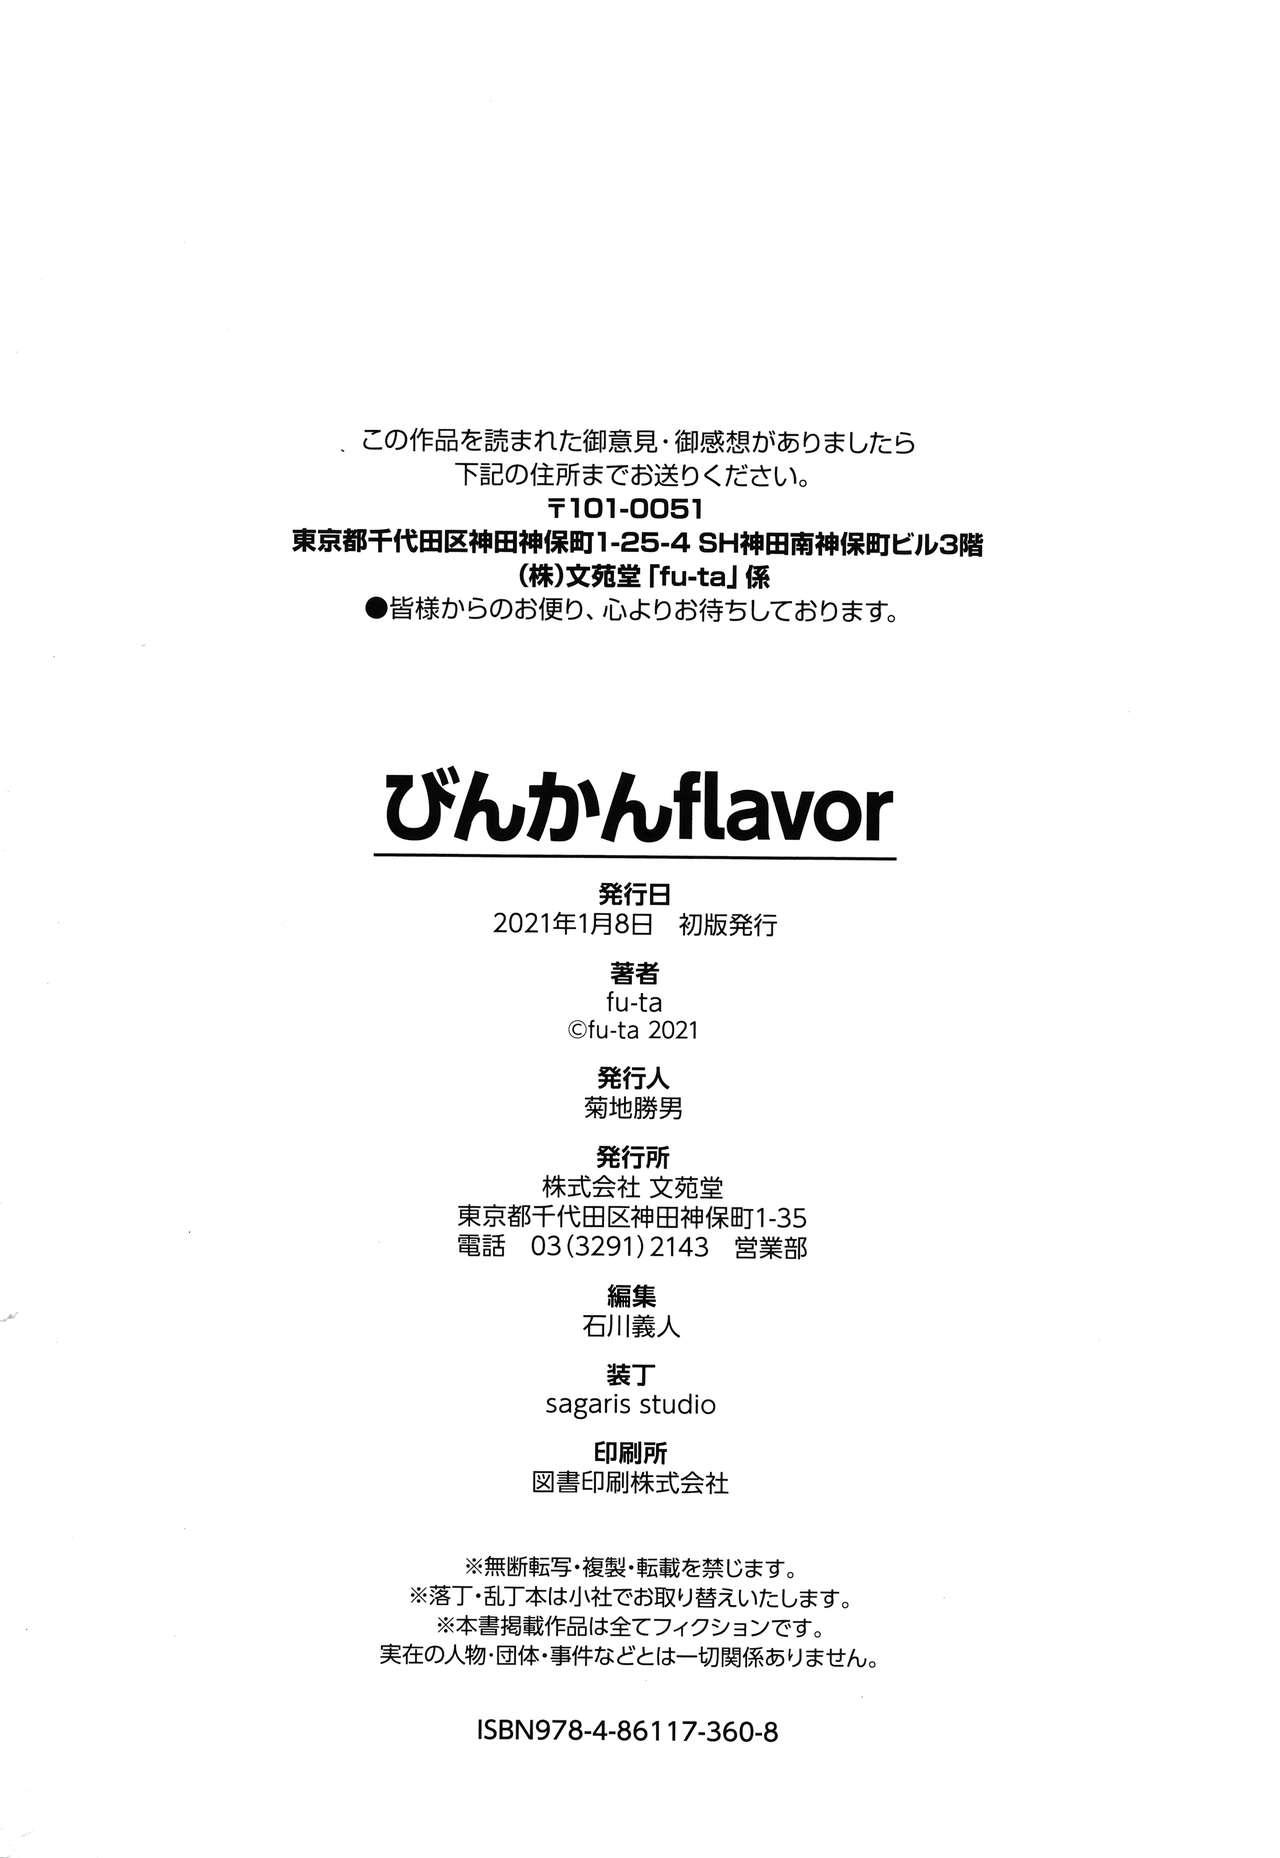 Binkan flavor 194